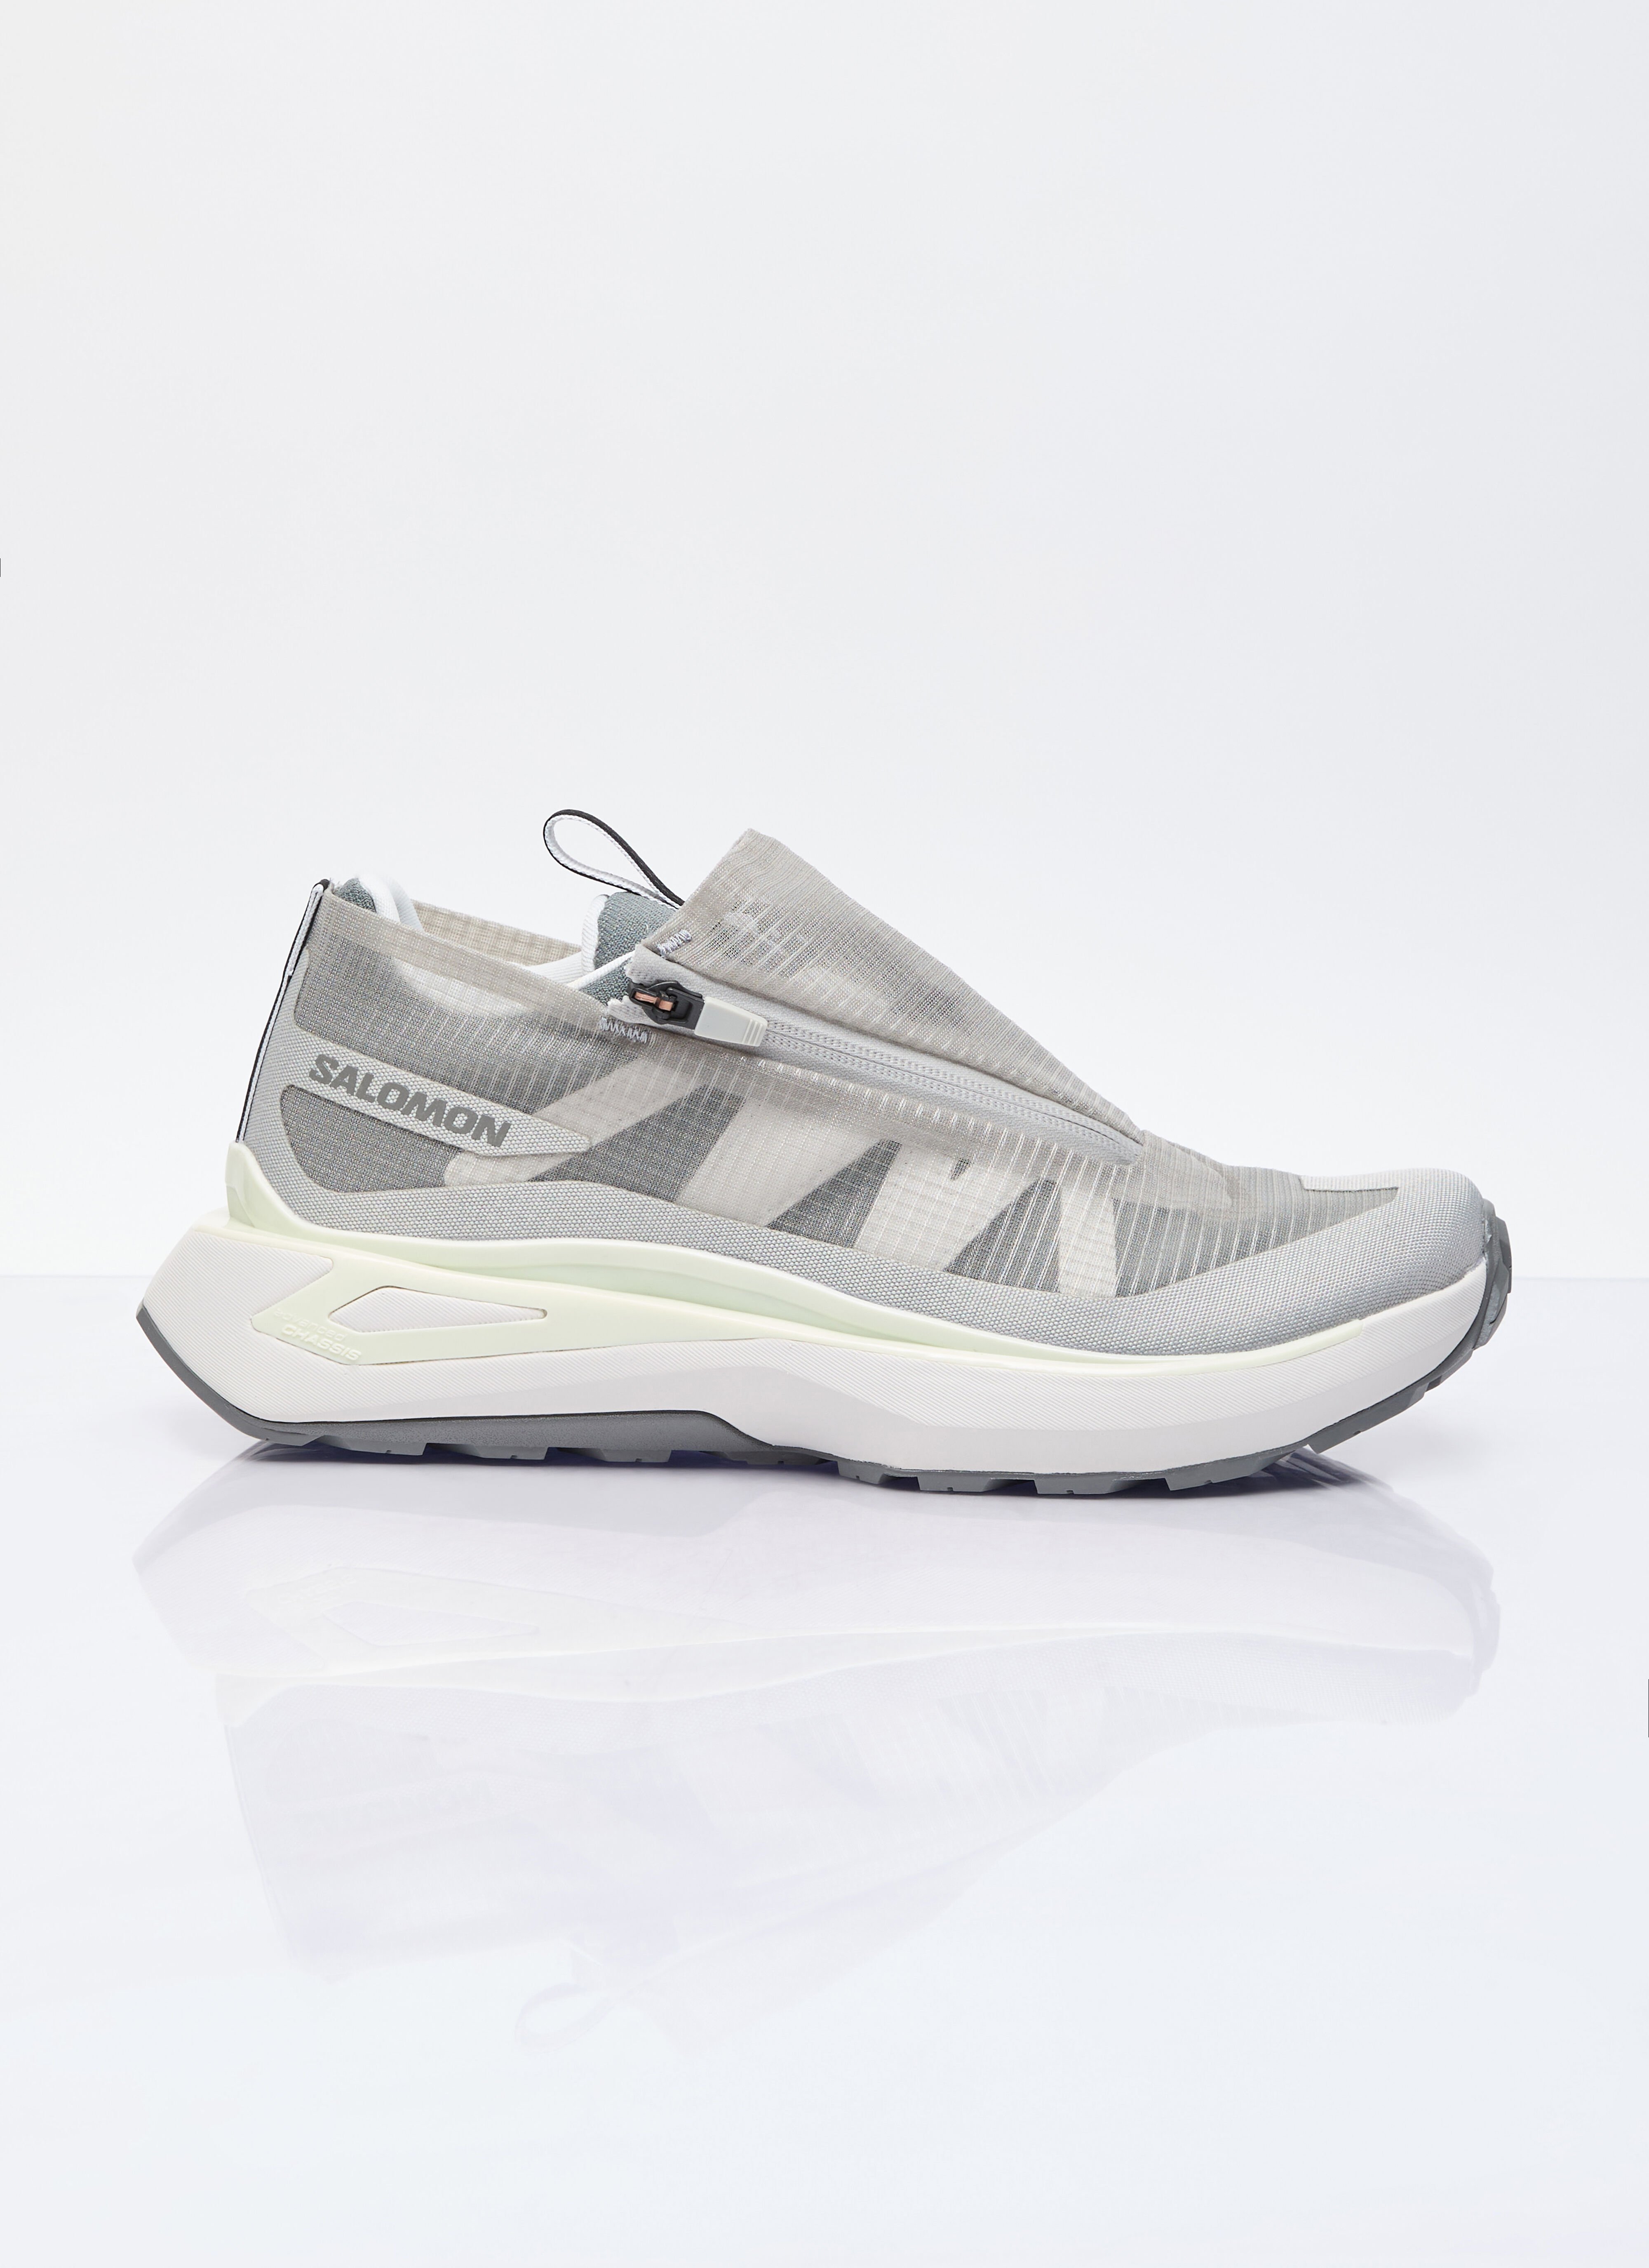 Salomon Odyssey ELMT Advanced 运动鞋 灰色 sal0356002